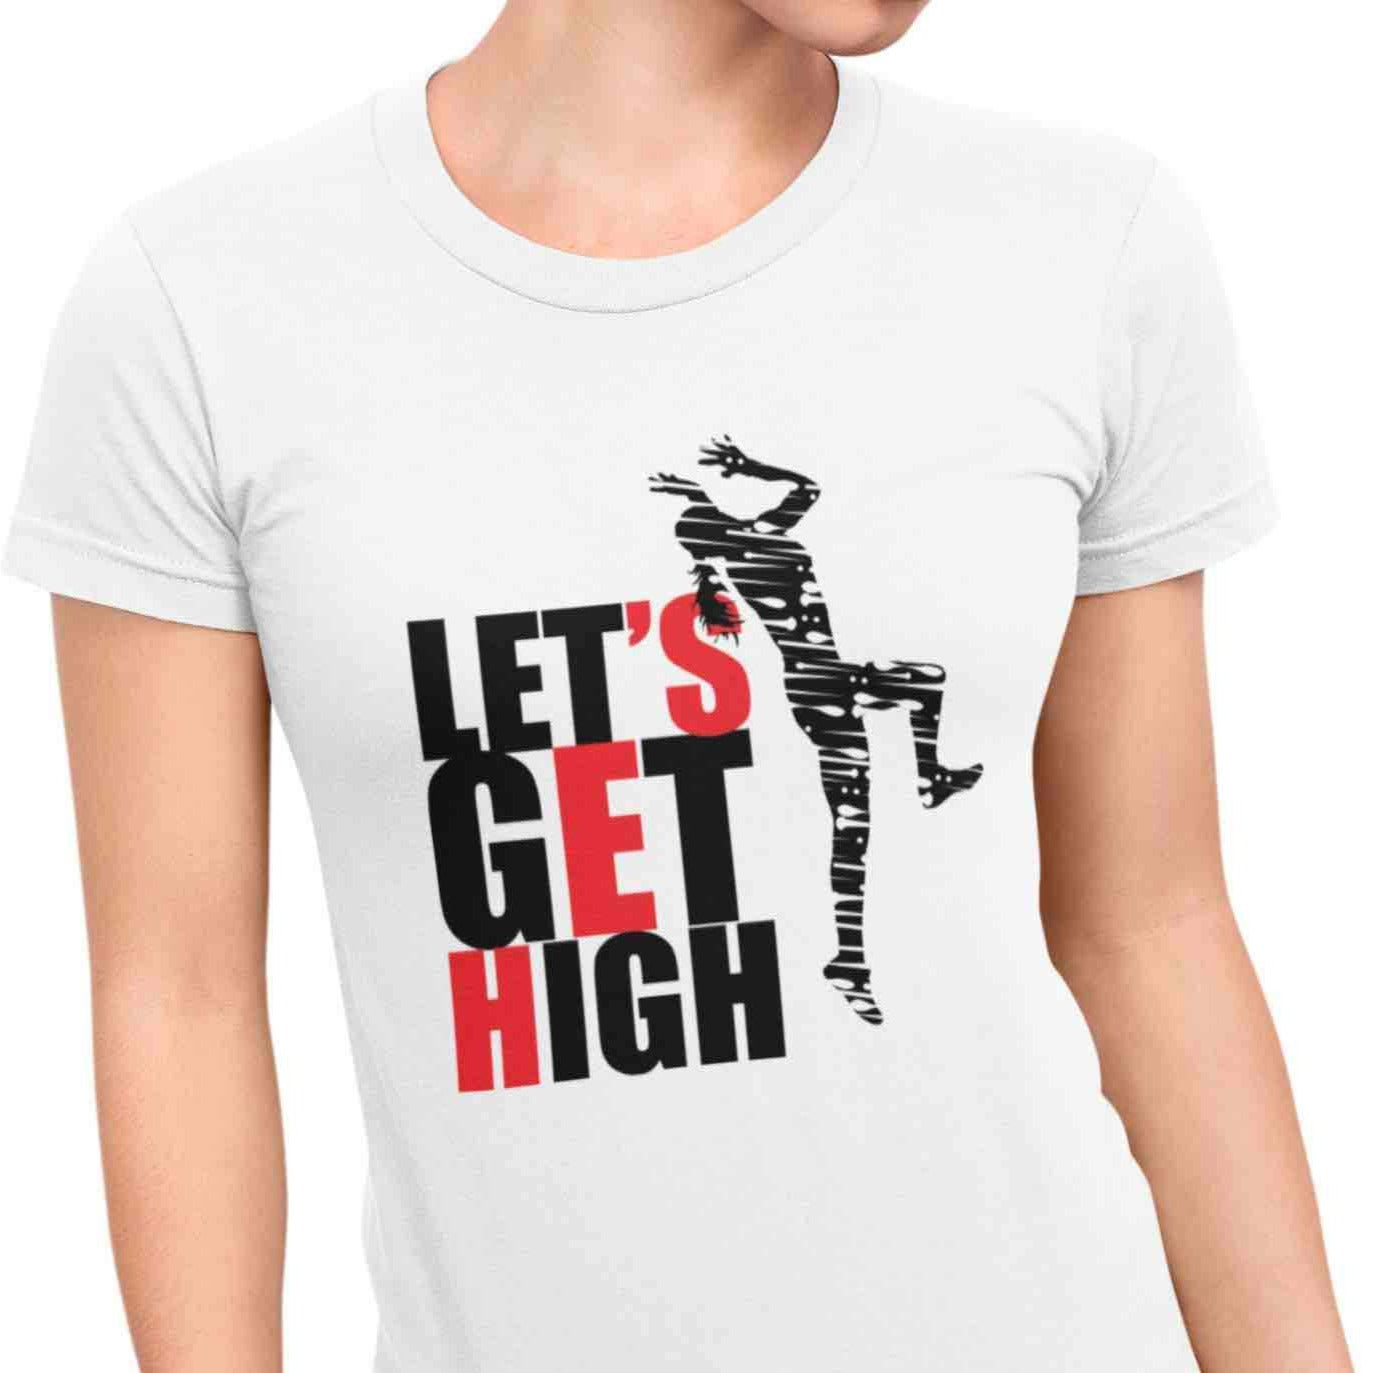 High Jump shirt Just get over it shirt athletics gift shirts